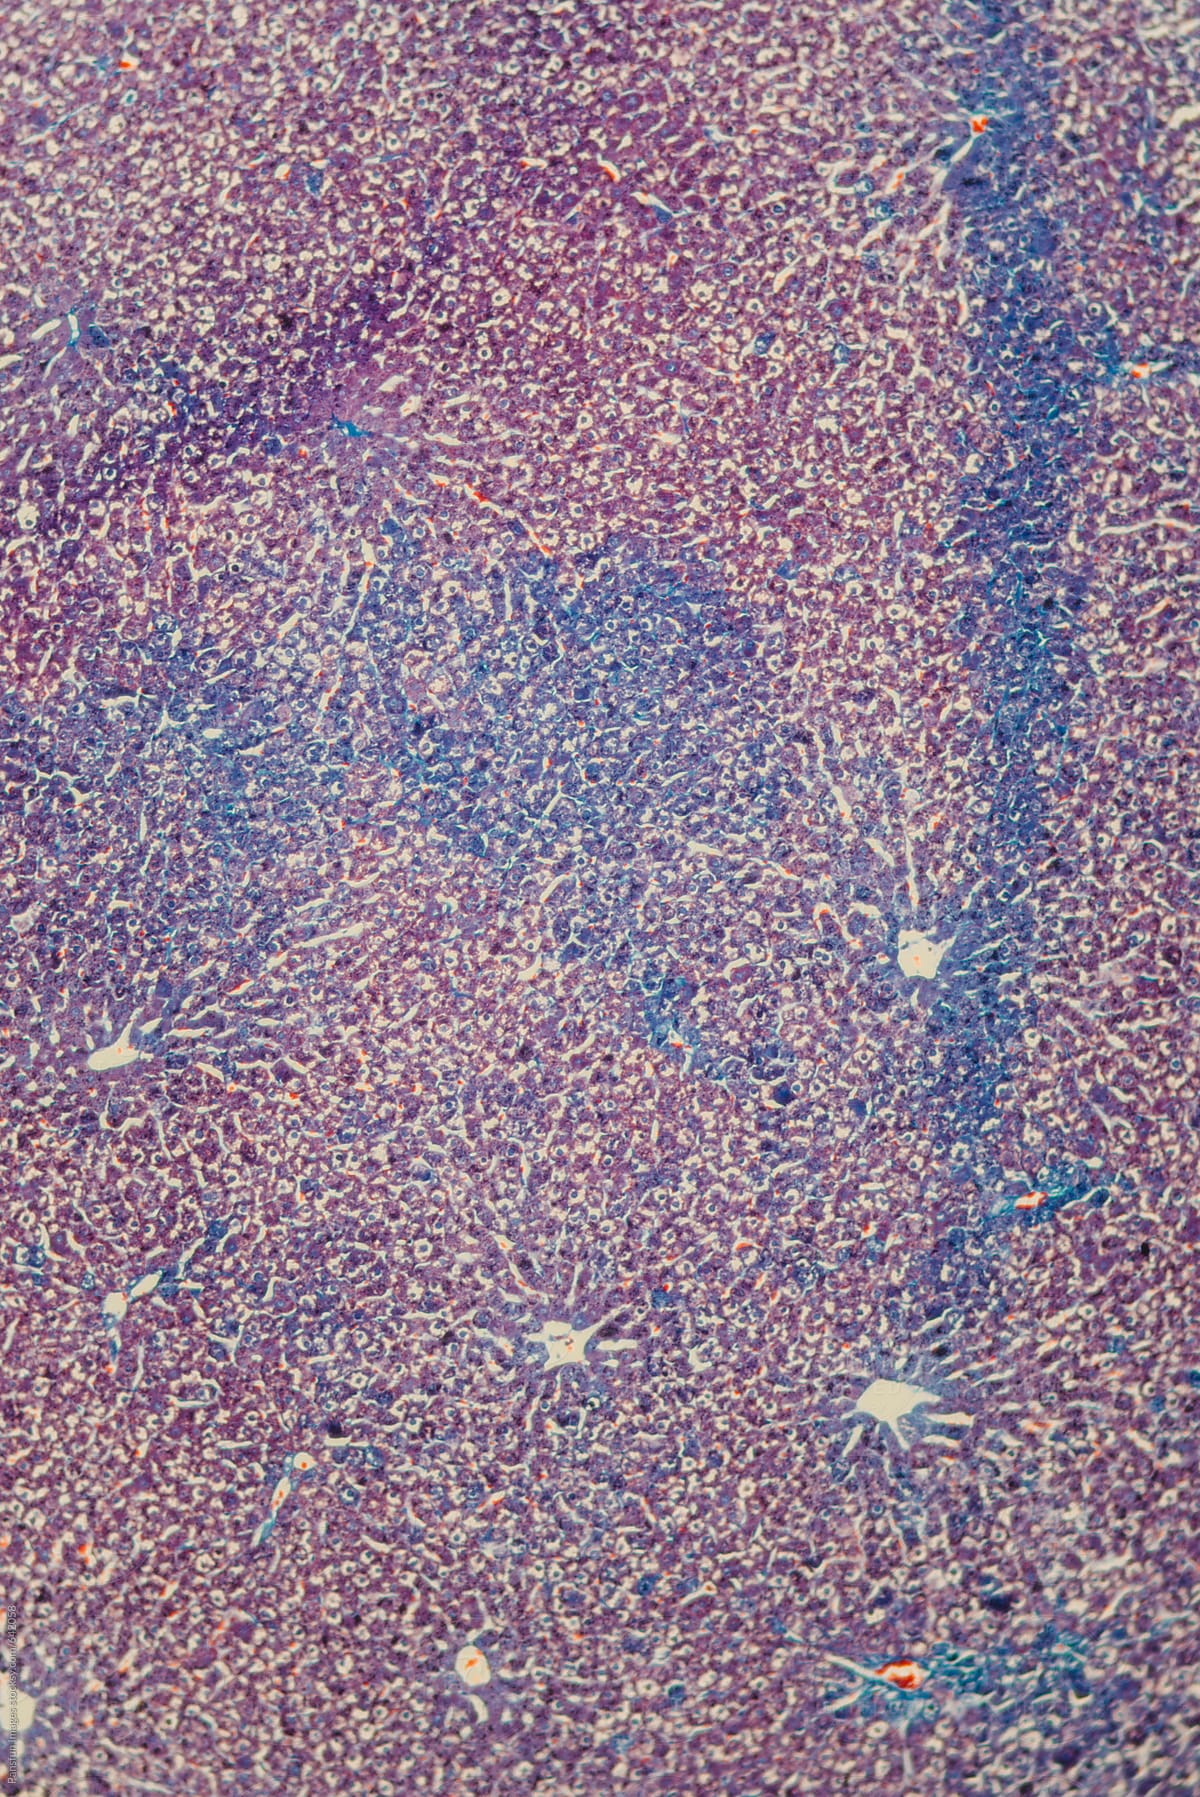 animal cells of rat liver tissue micrograph